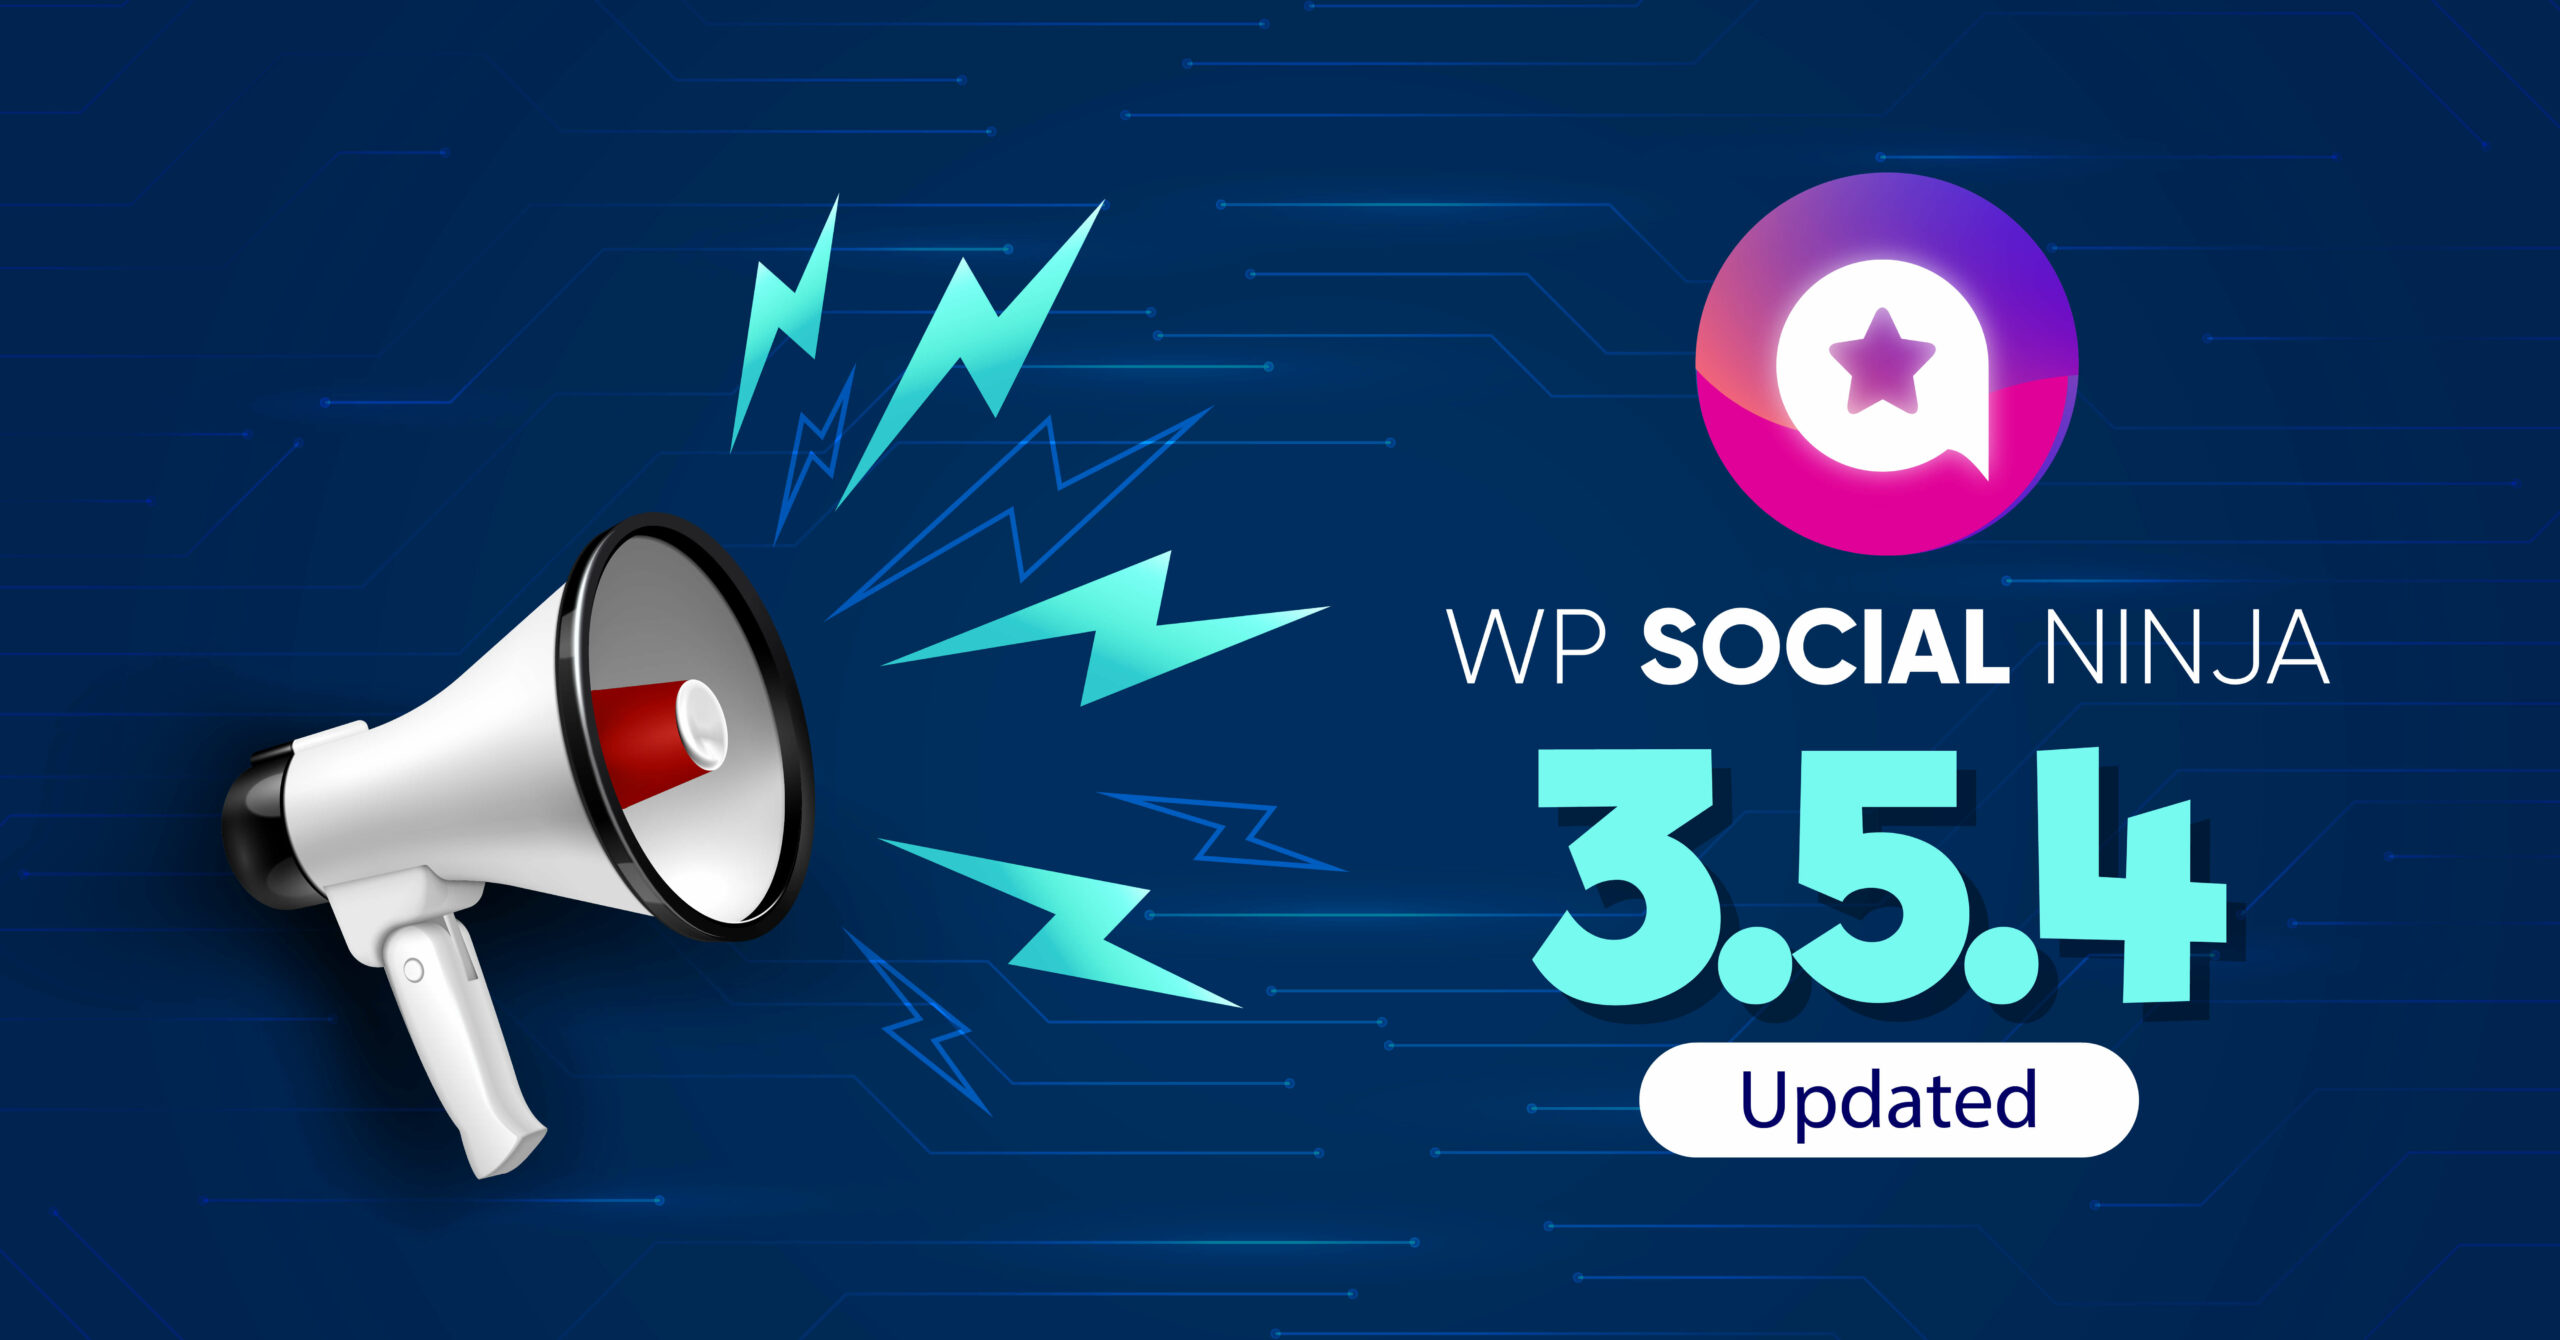 WP Social Ninja Release Note 3.5.4